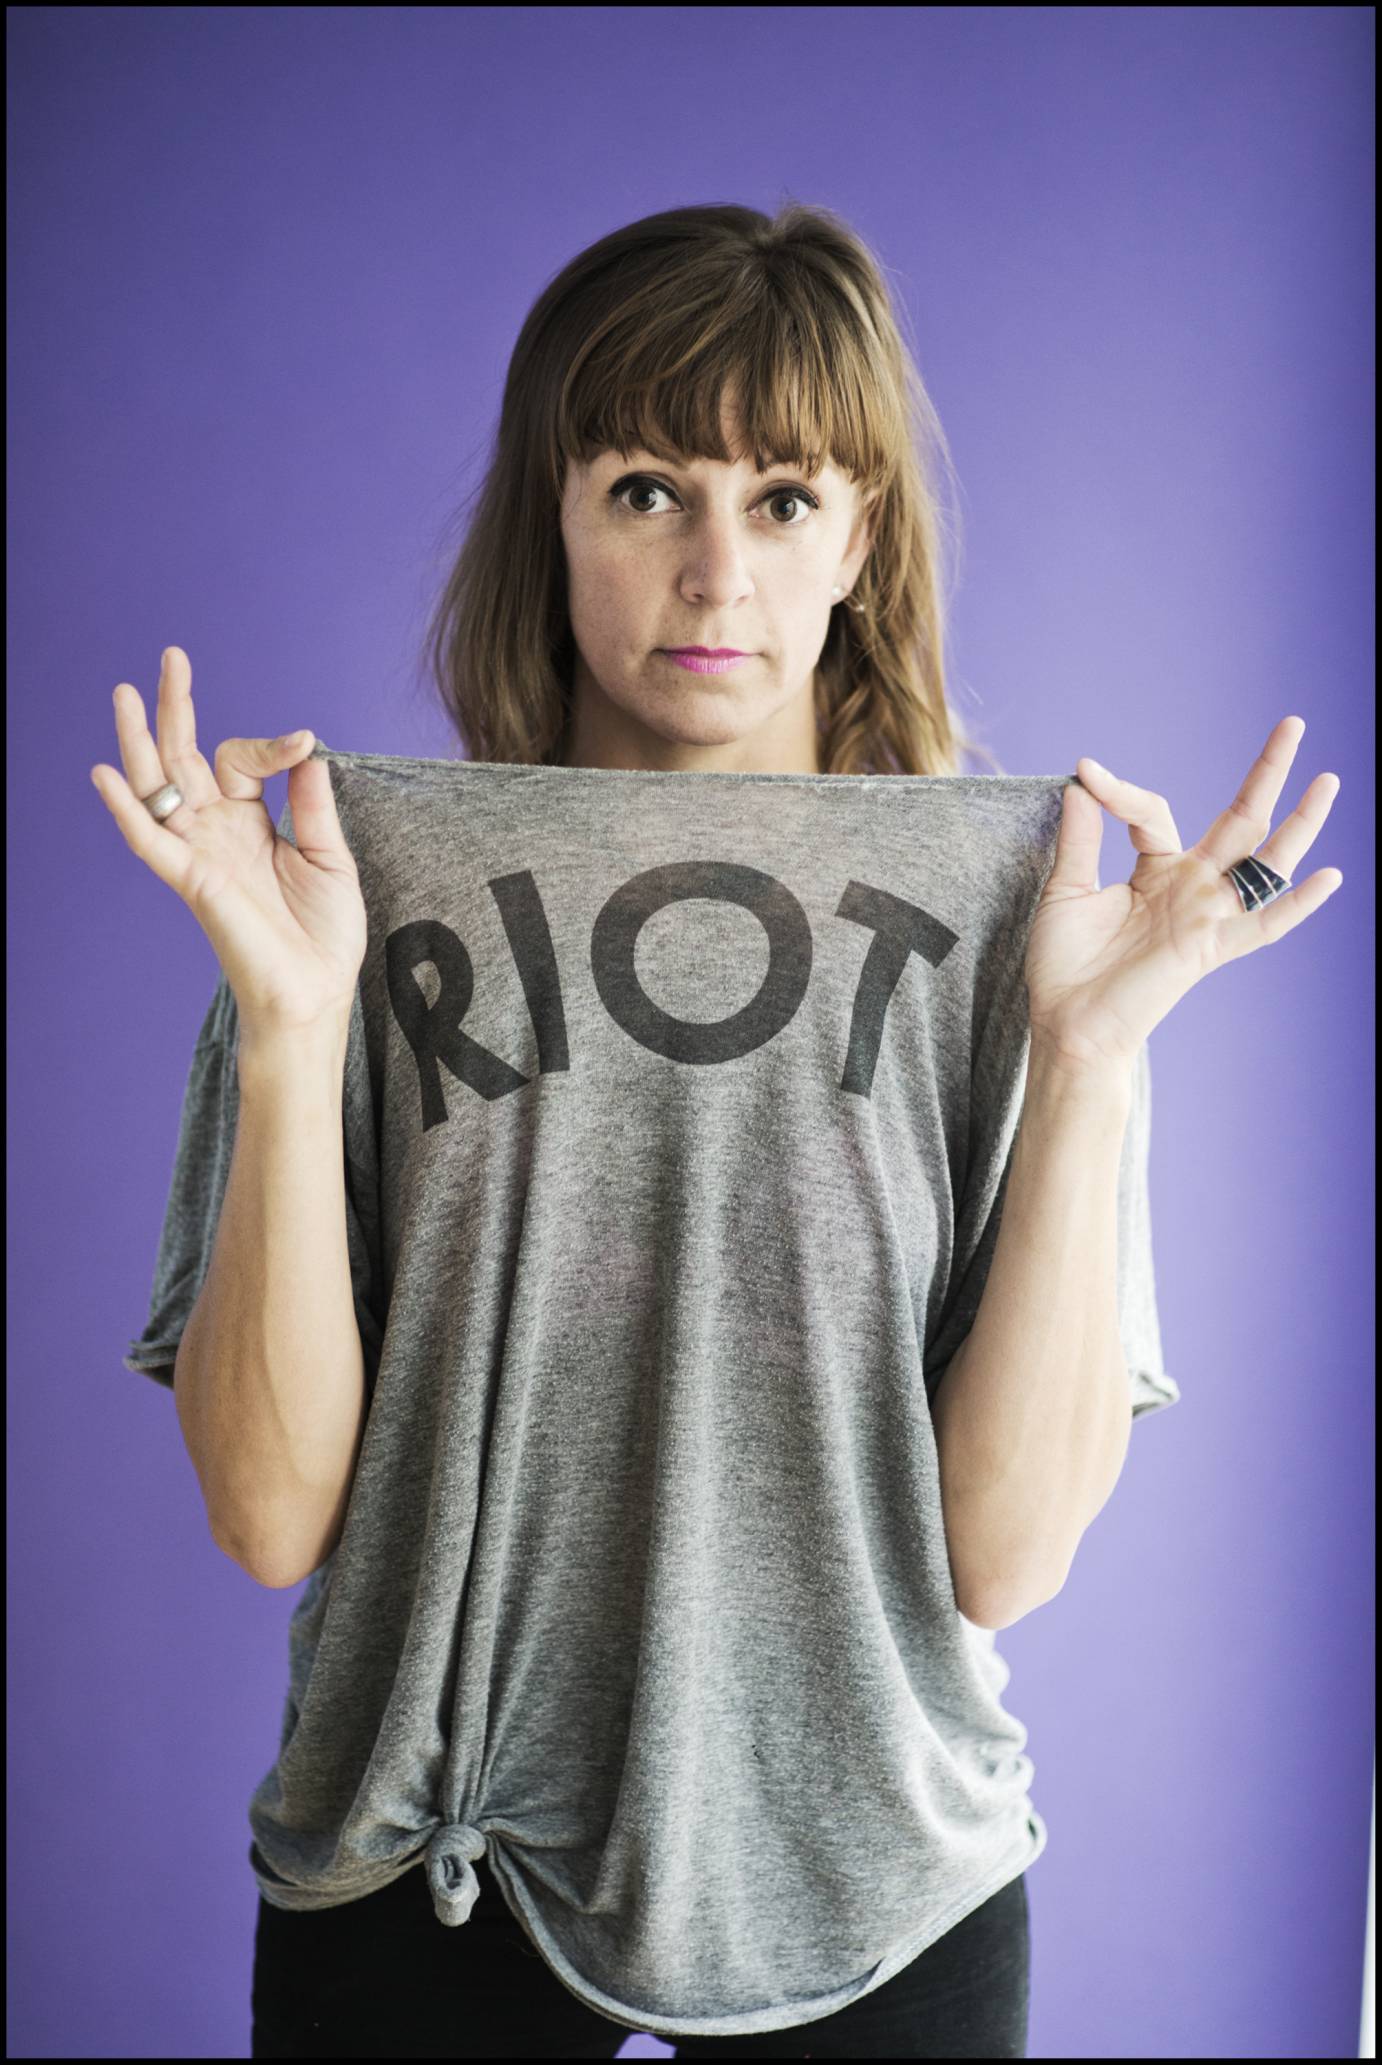 Adrienne Truscott wears a gray T-shirt that says RIOT